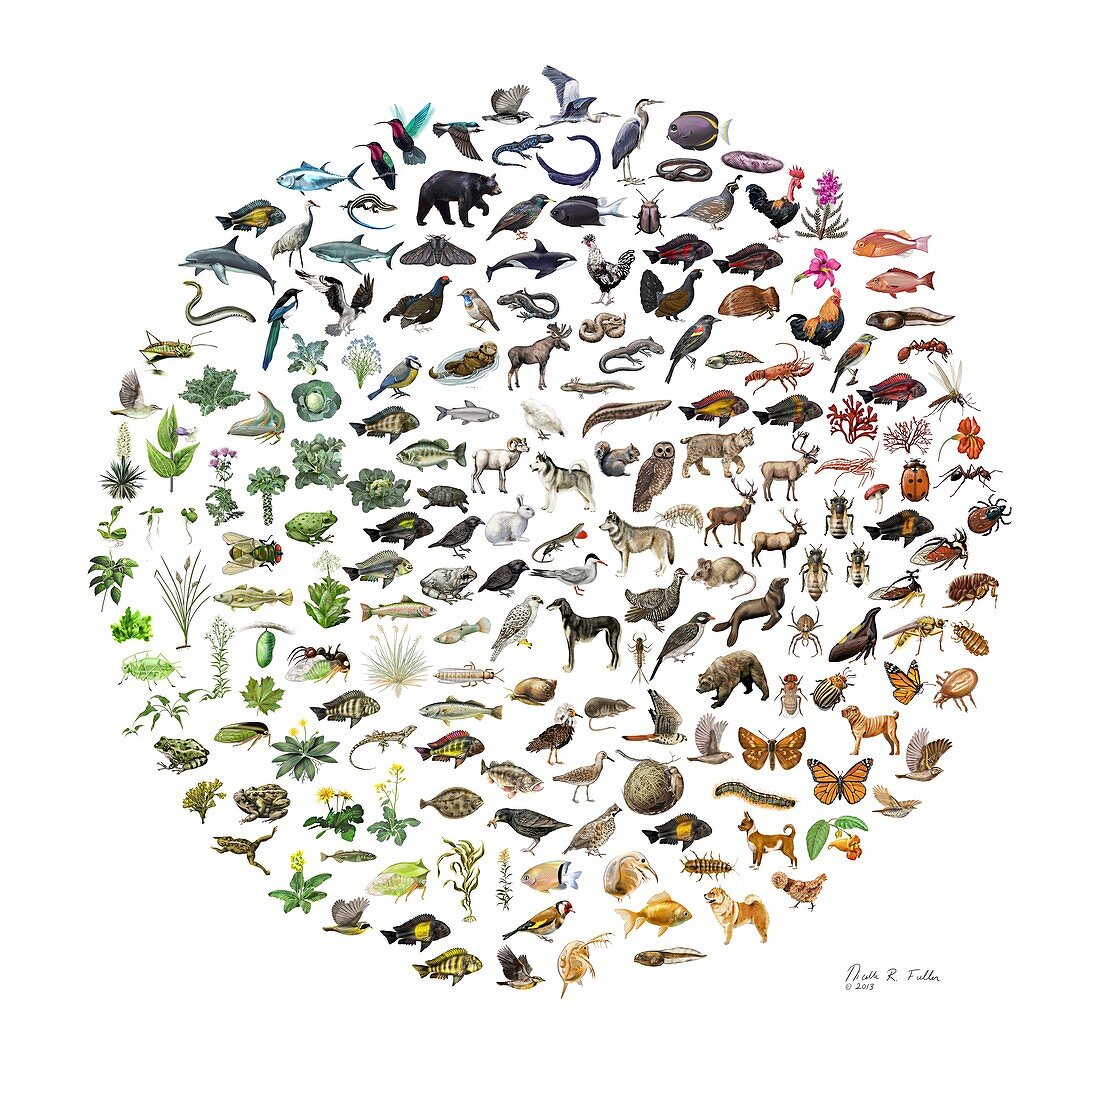 Biodiversity, conceptual illustration